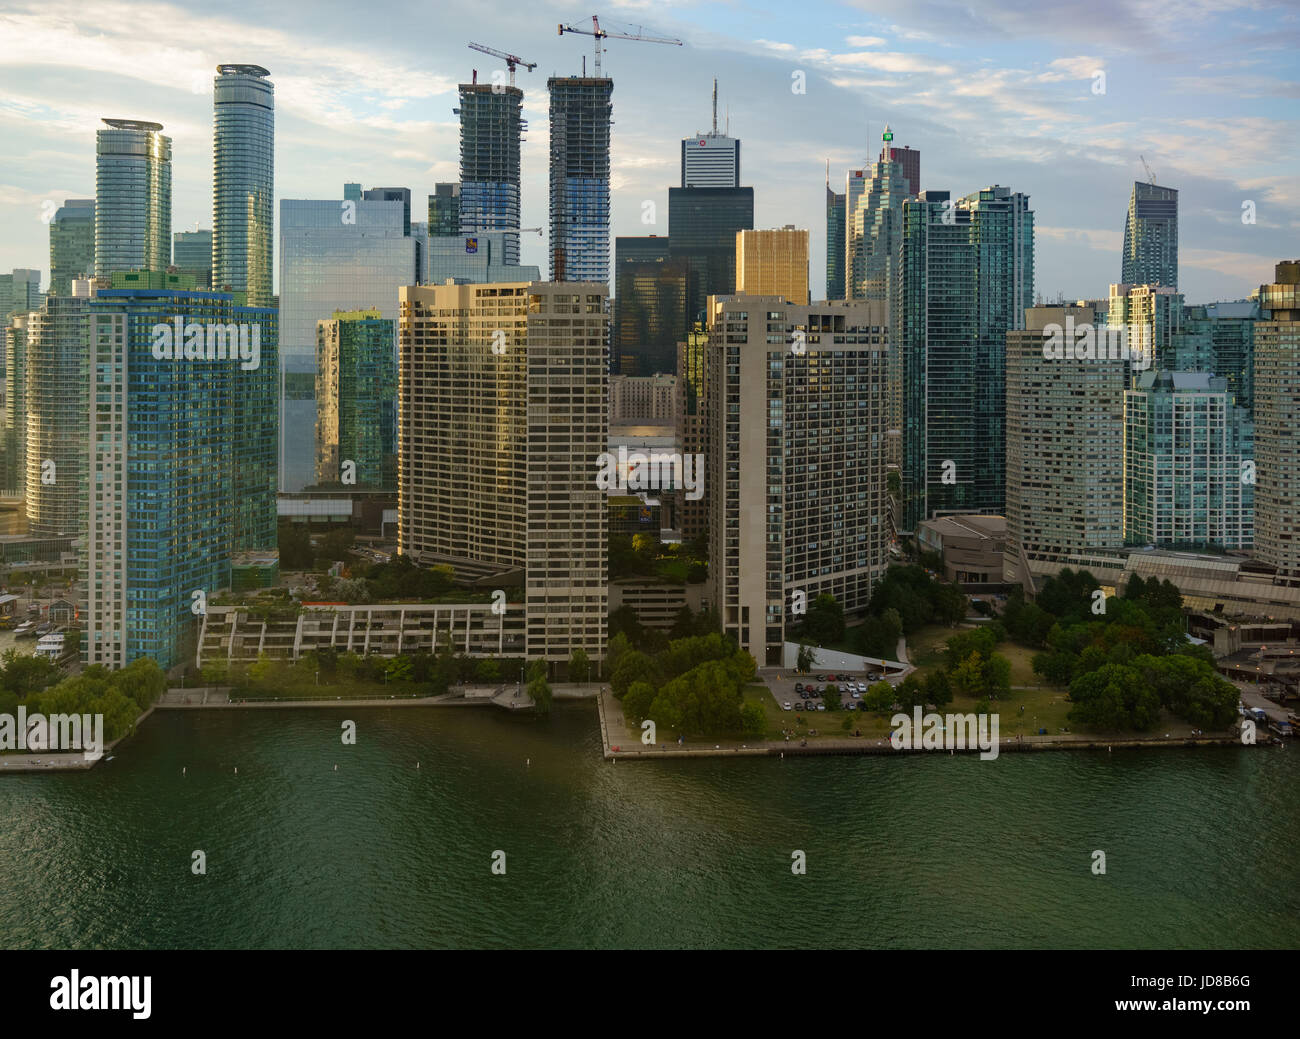 Erhöhte Ansicht von Gebäuden, bei Tag, Toronto, Ontario, Kanada. Luftbild aus Ontario Kanada 2016 Stockfoto